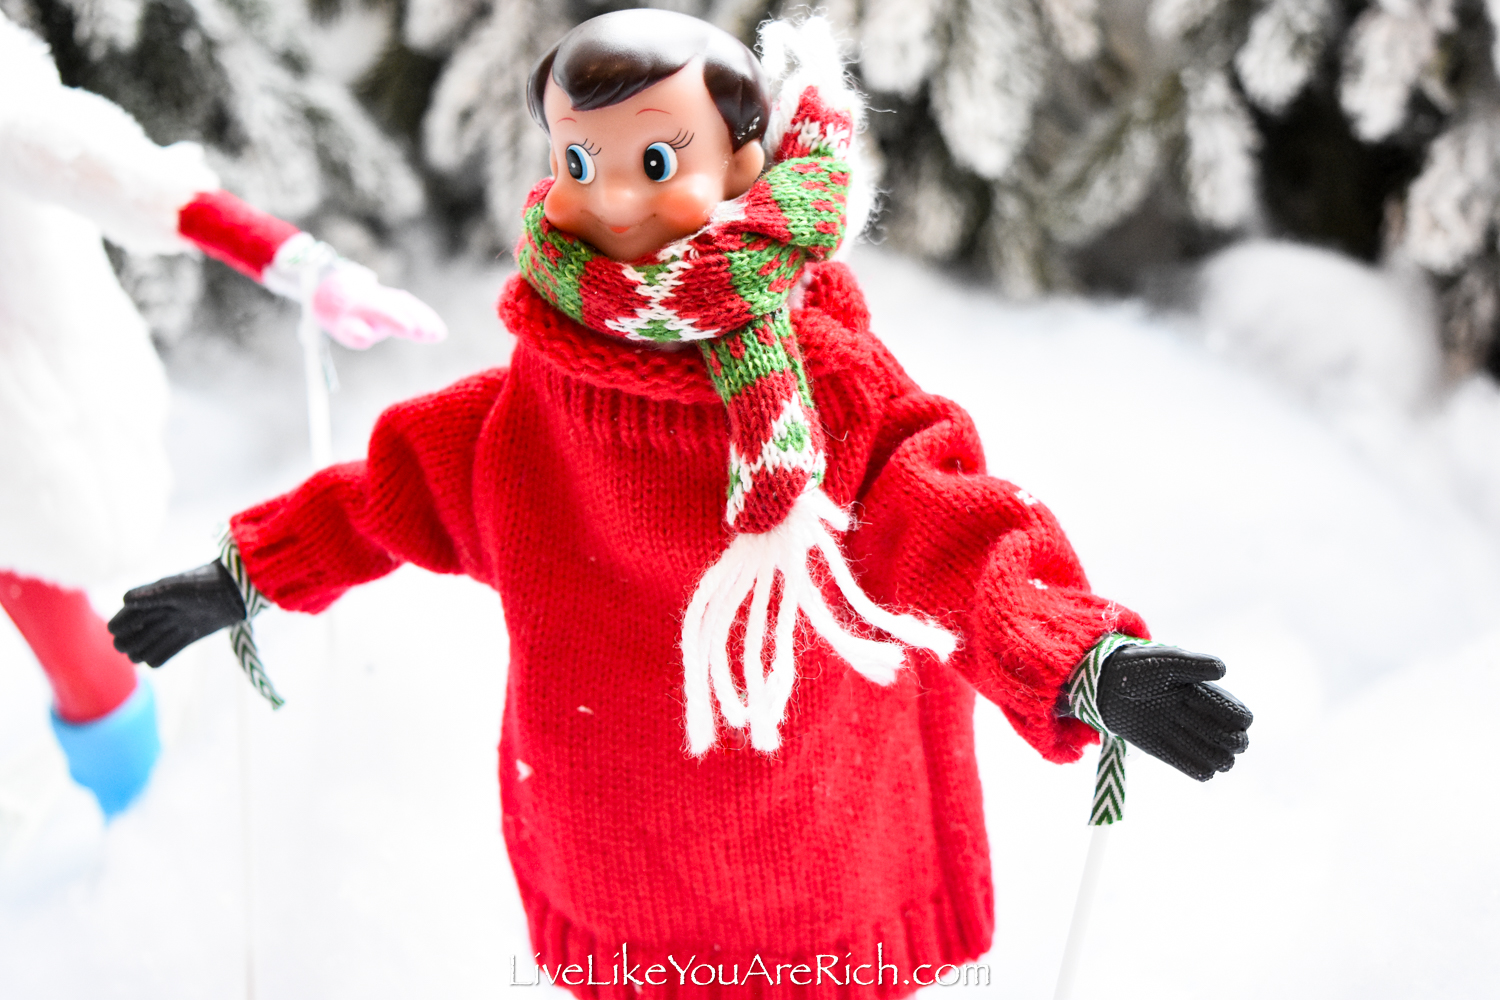 Elf on the Shelf: Snowshoeing